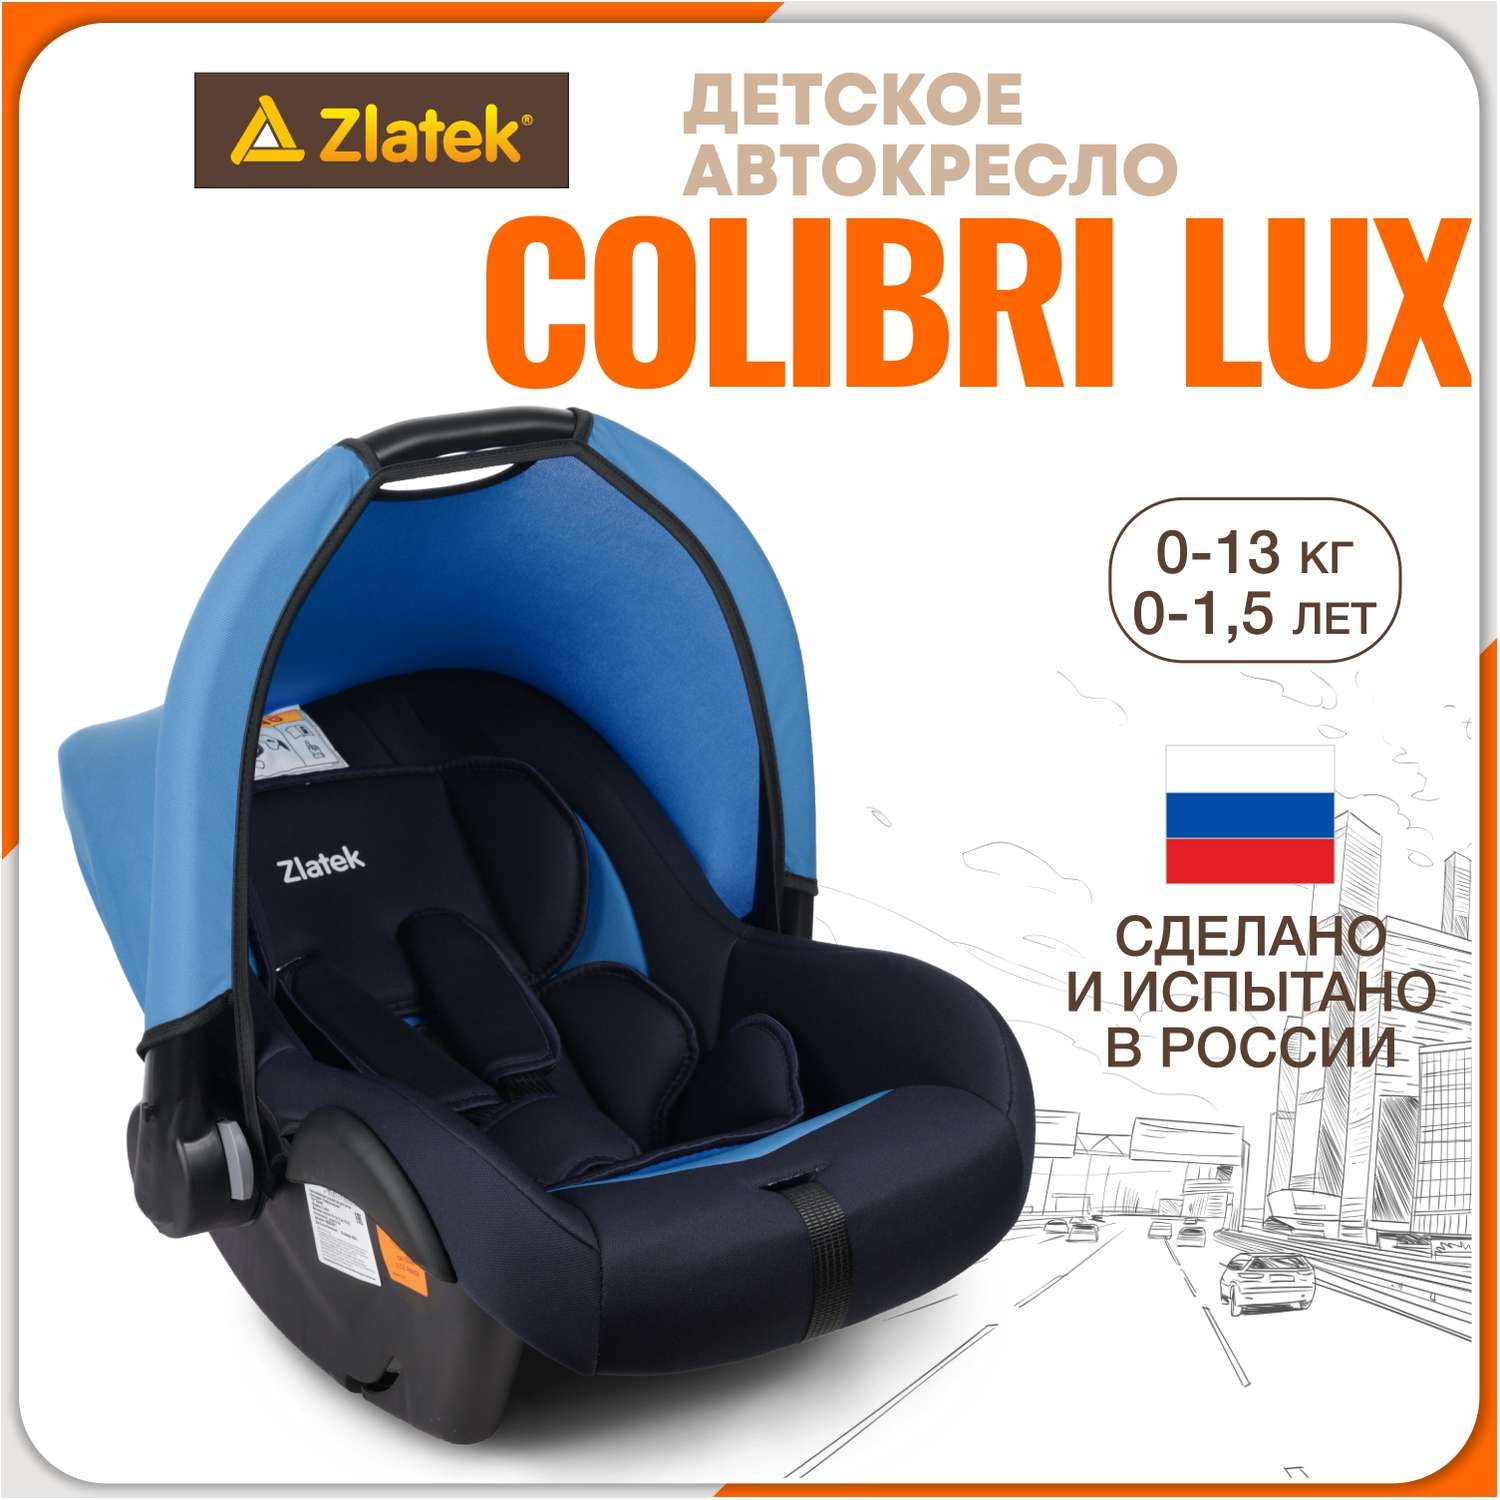 Детское автокресло ZLATEK Colibri Lux индиго - фото 1